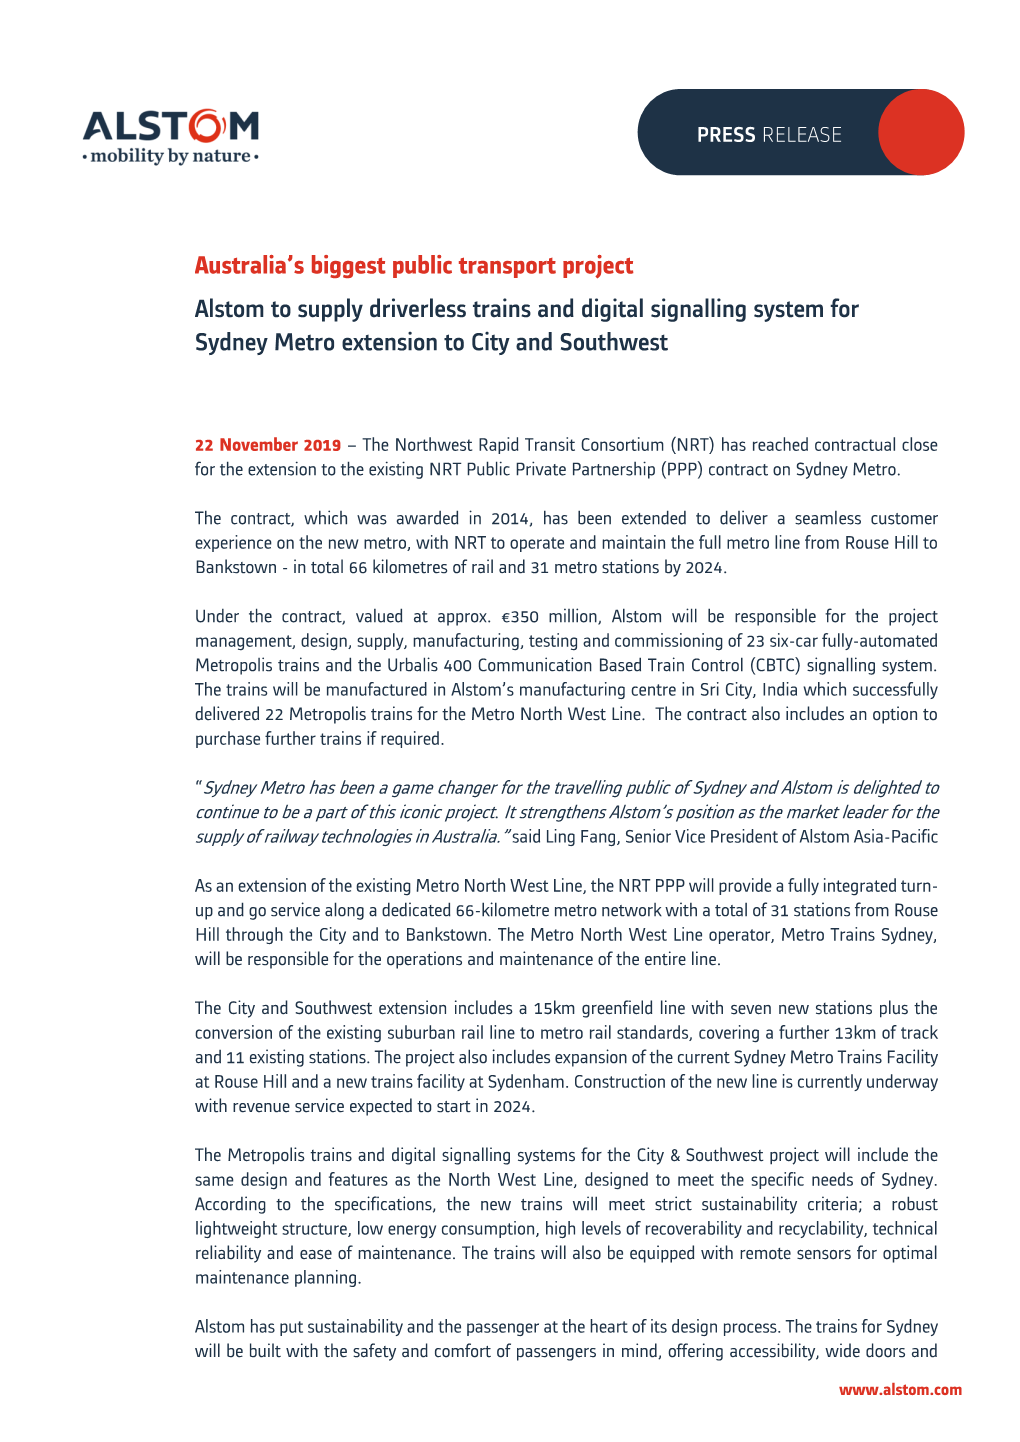 Australia's Biggest Public Transport Project Alstom To